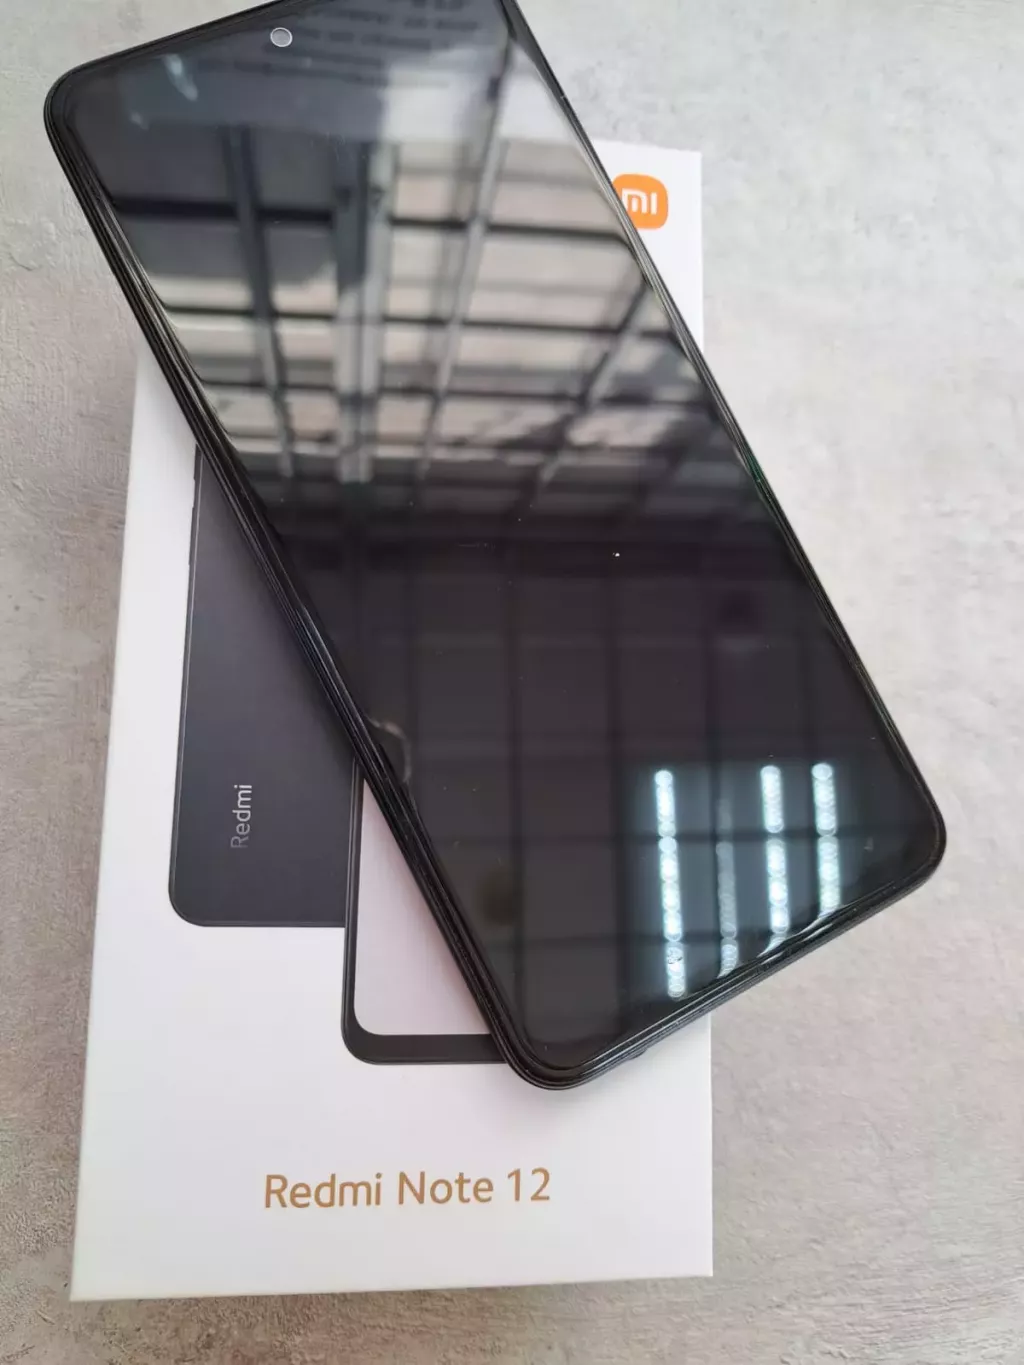 Купить б/у Xiaomi Redmi Note 12,  256 гб, Костанай 1015, лот 313732-1